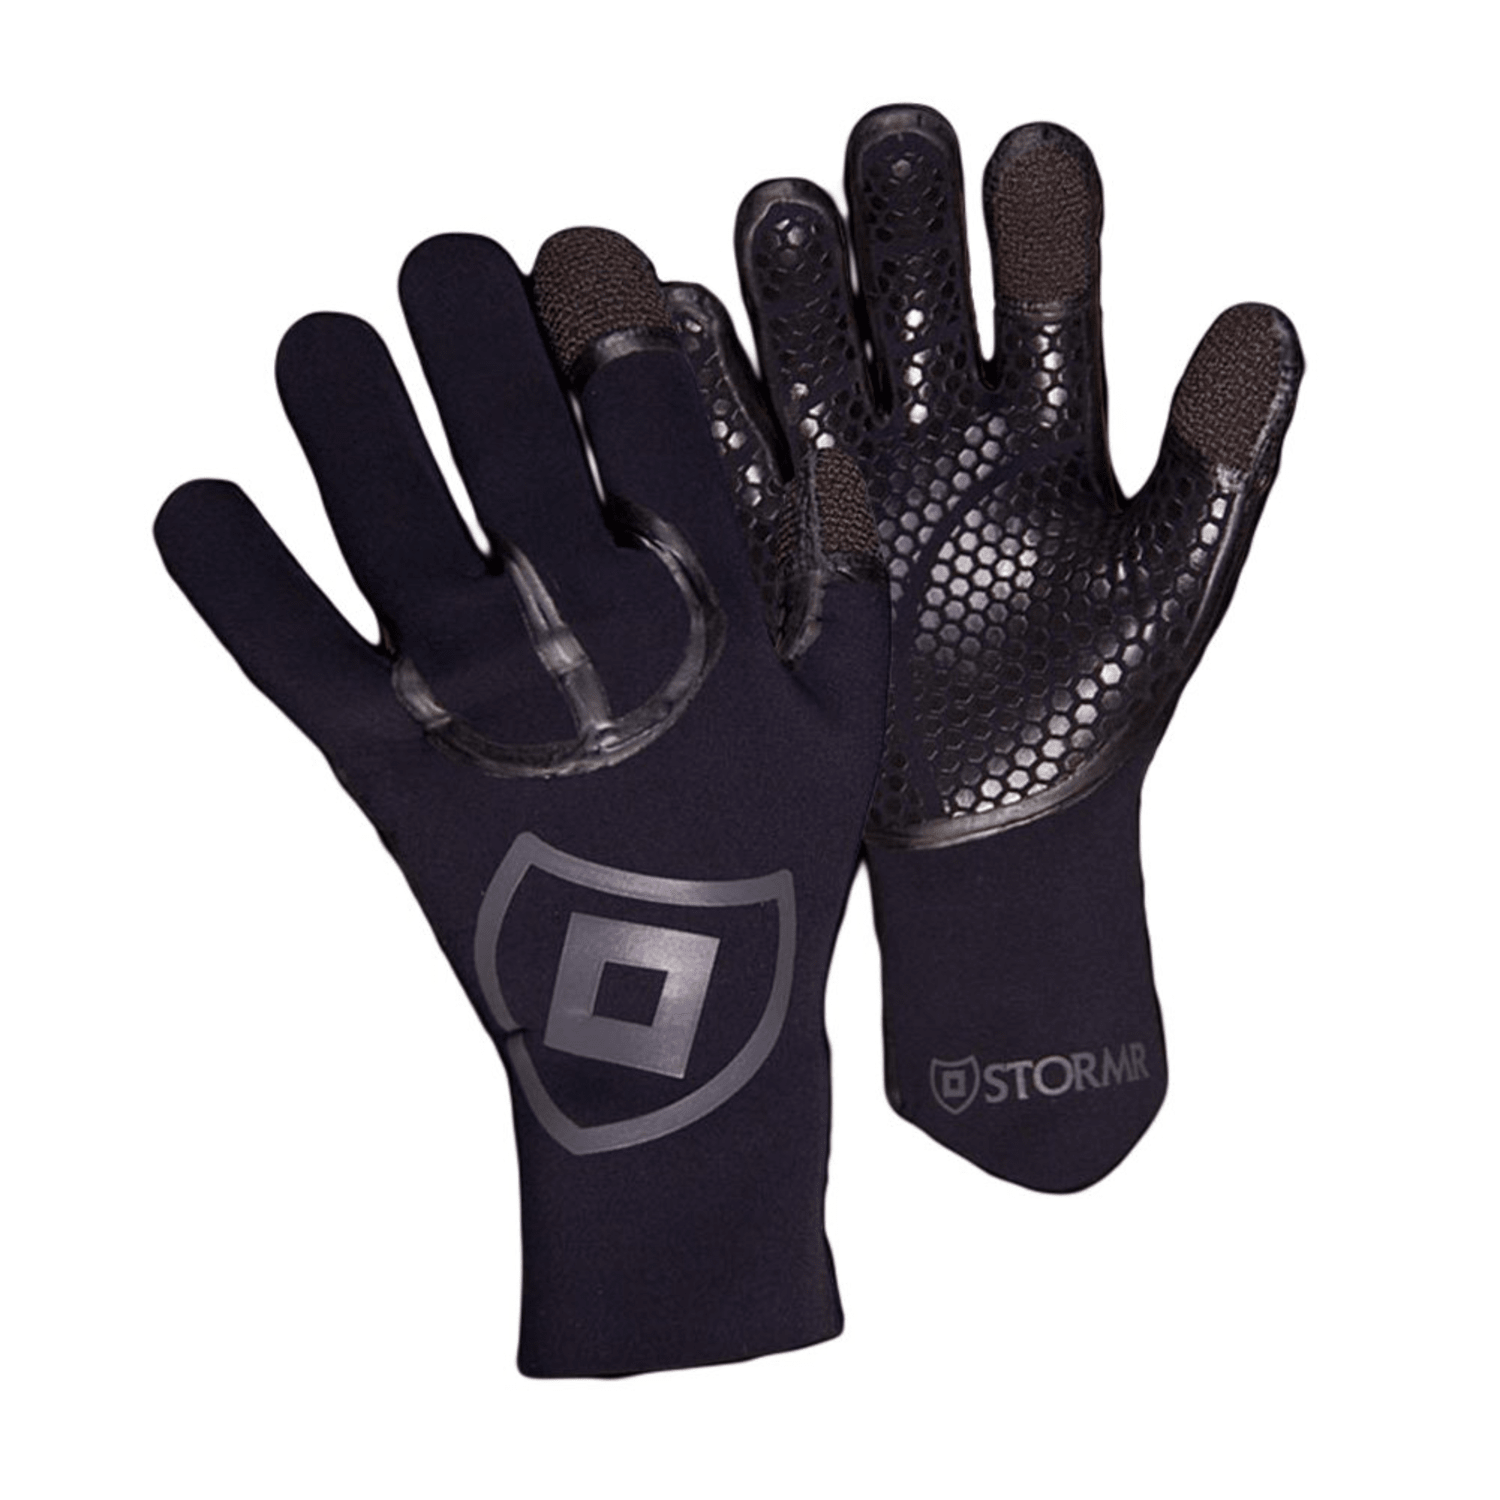 StormR Cast Neoprene Glove